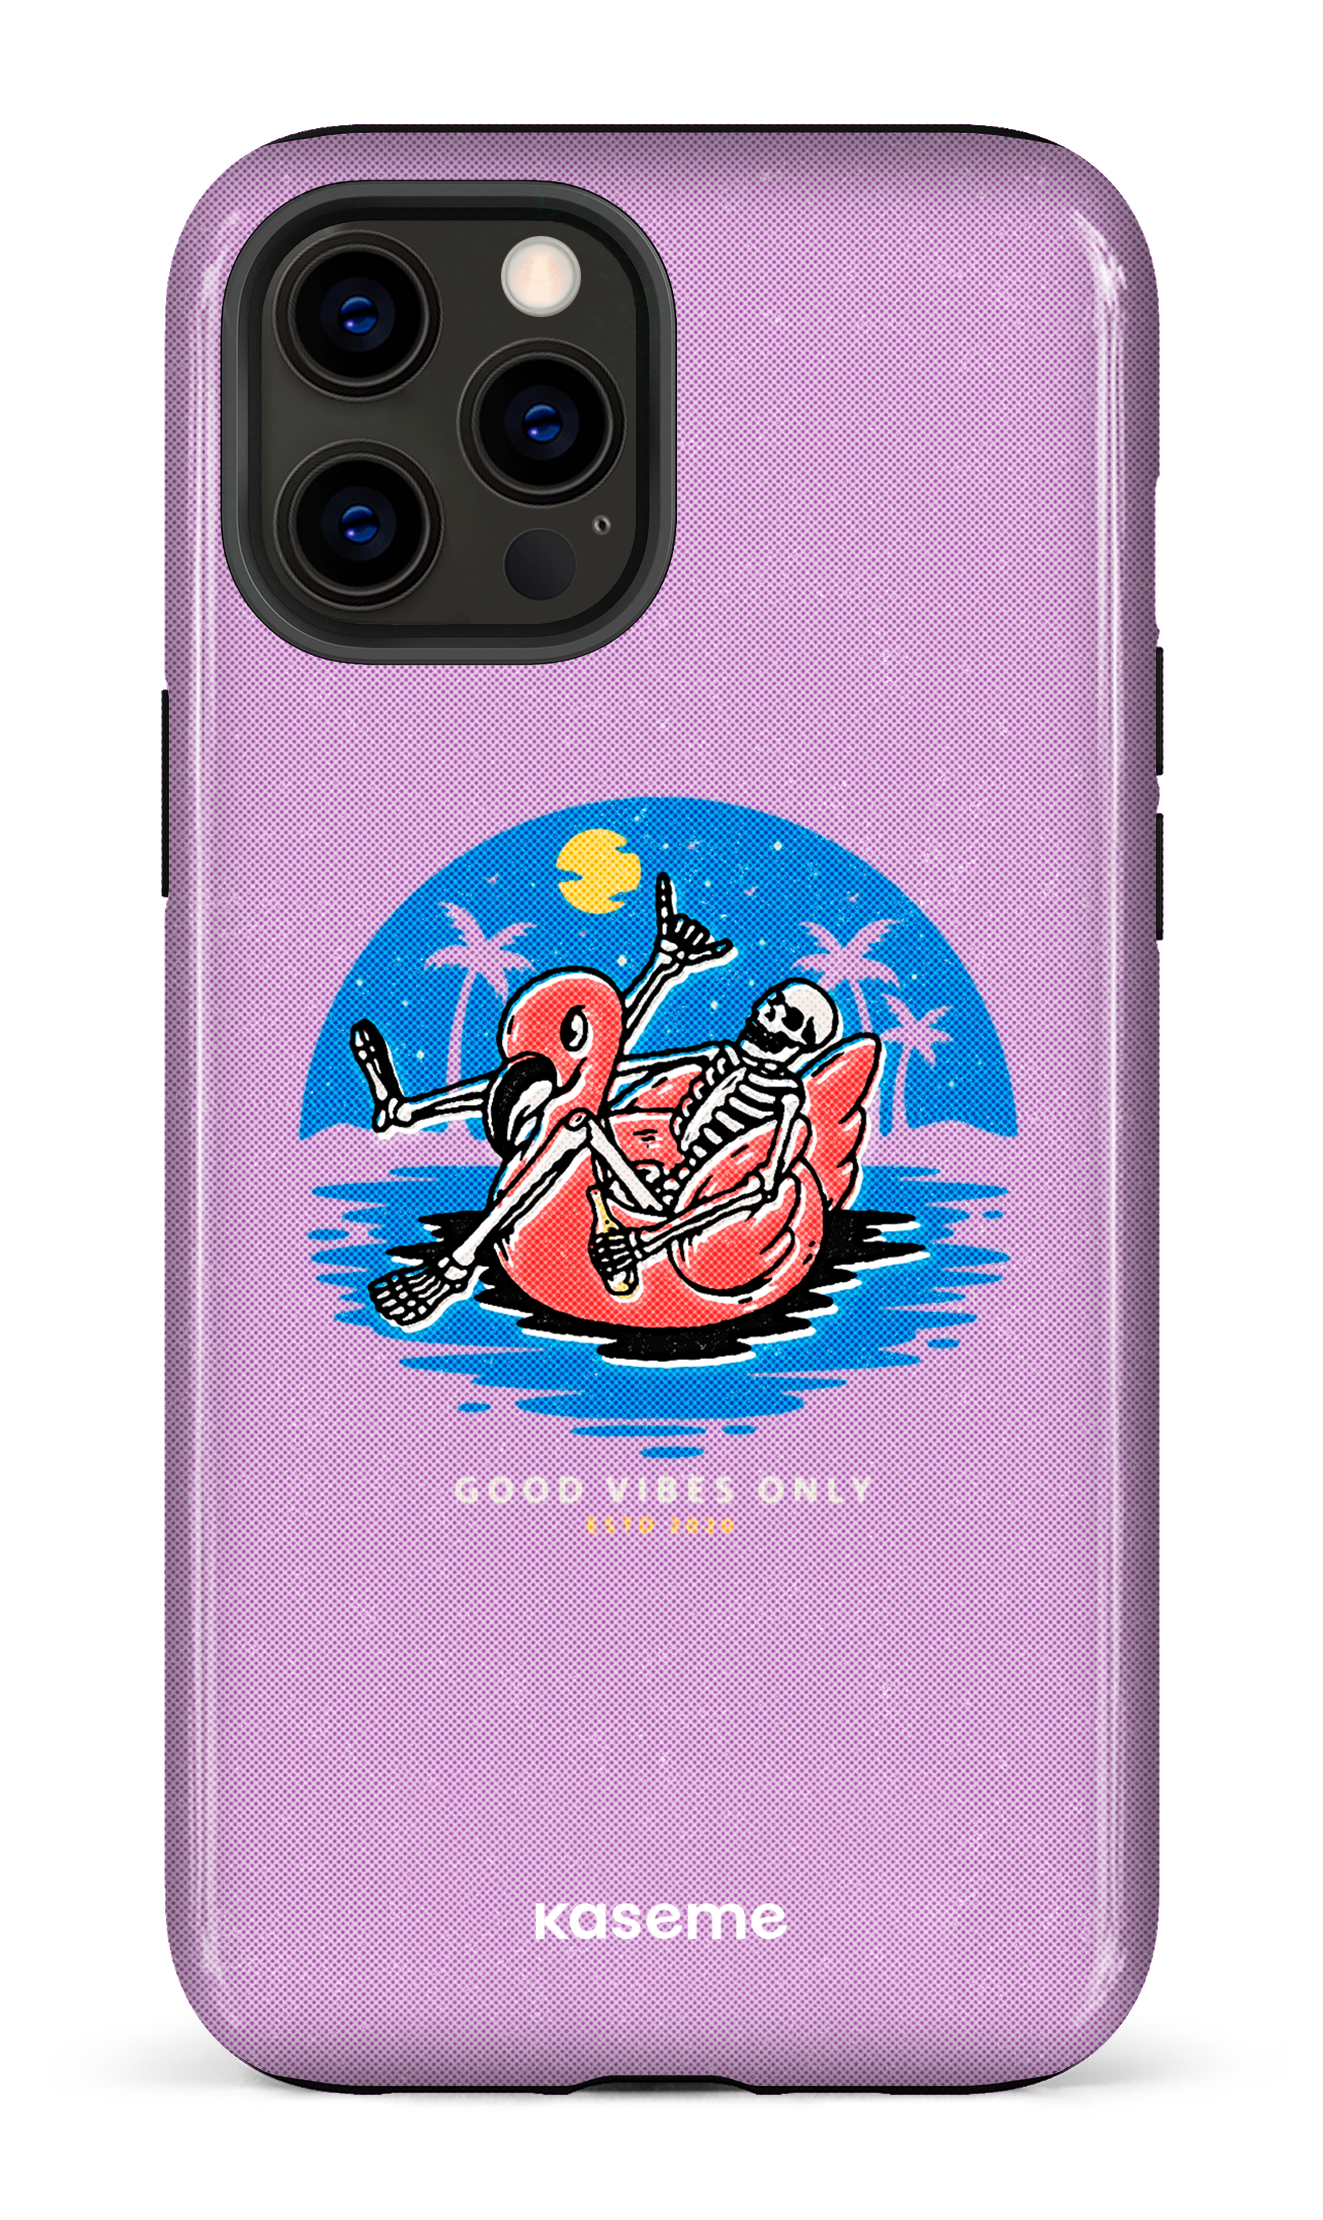 Seaside purple - iPhone 12 Pro Max